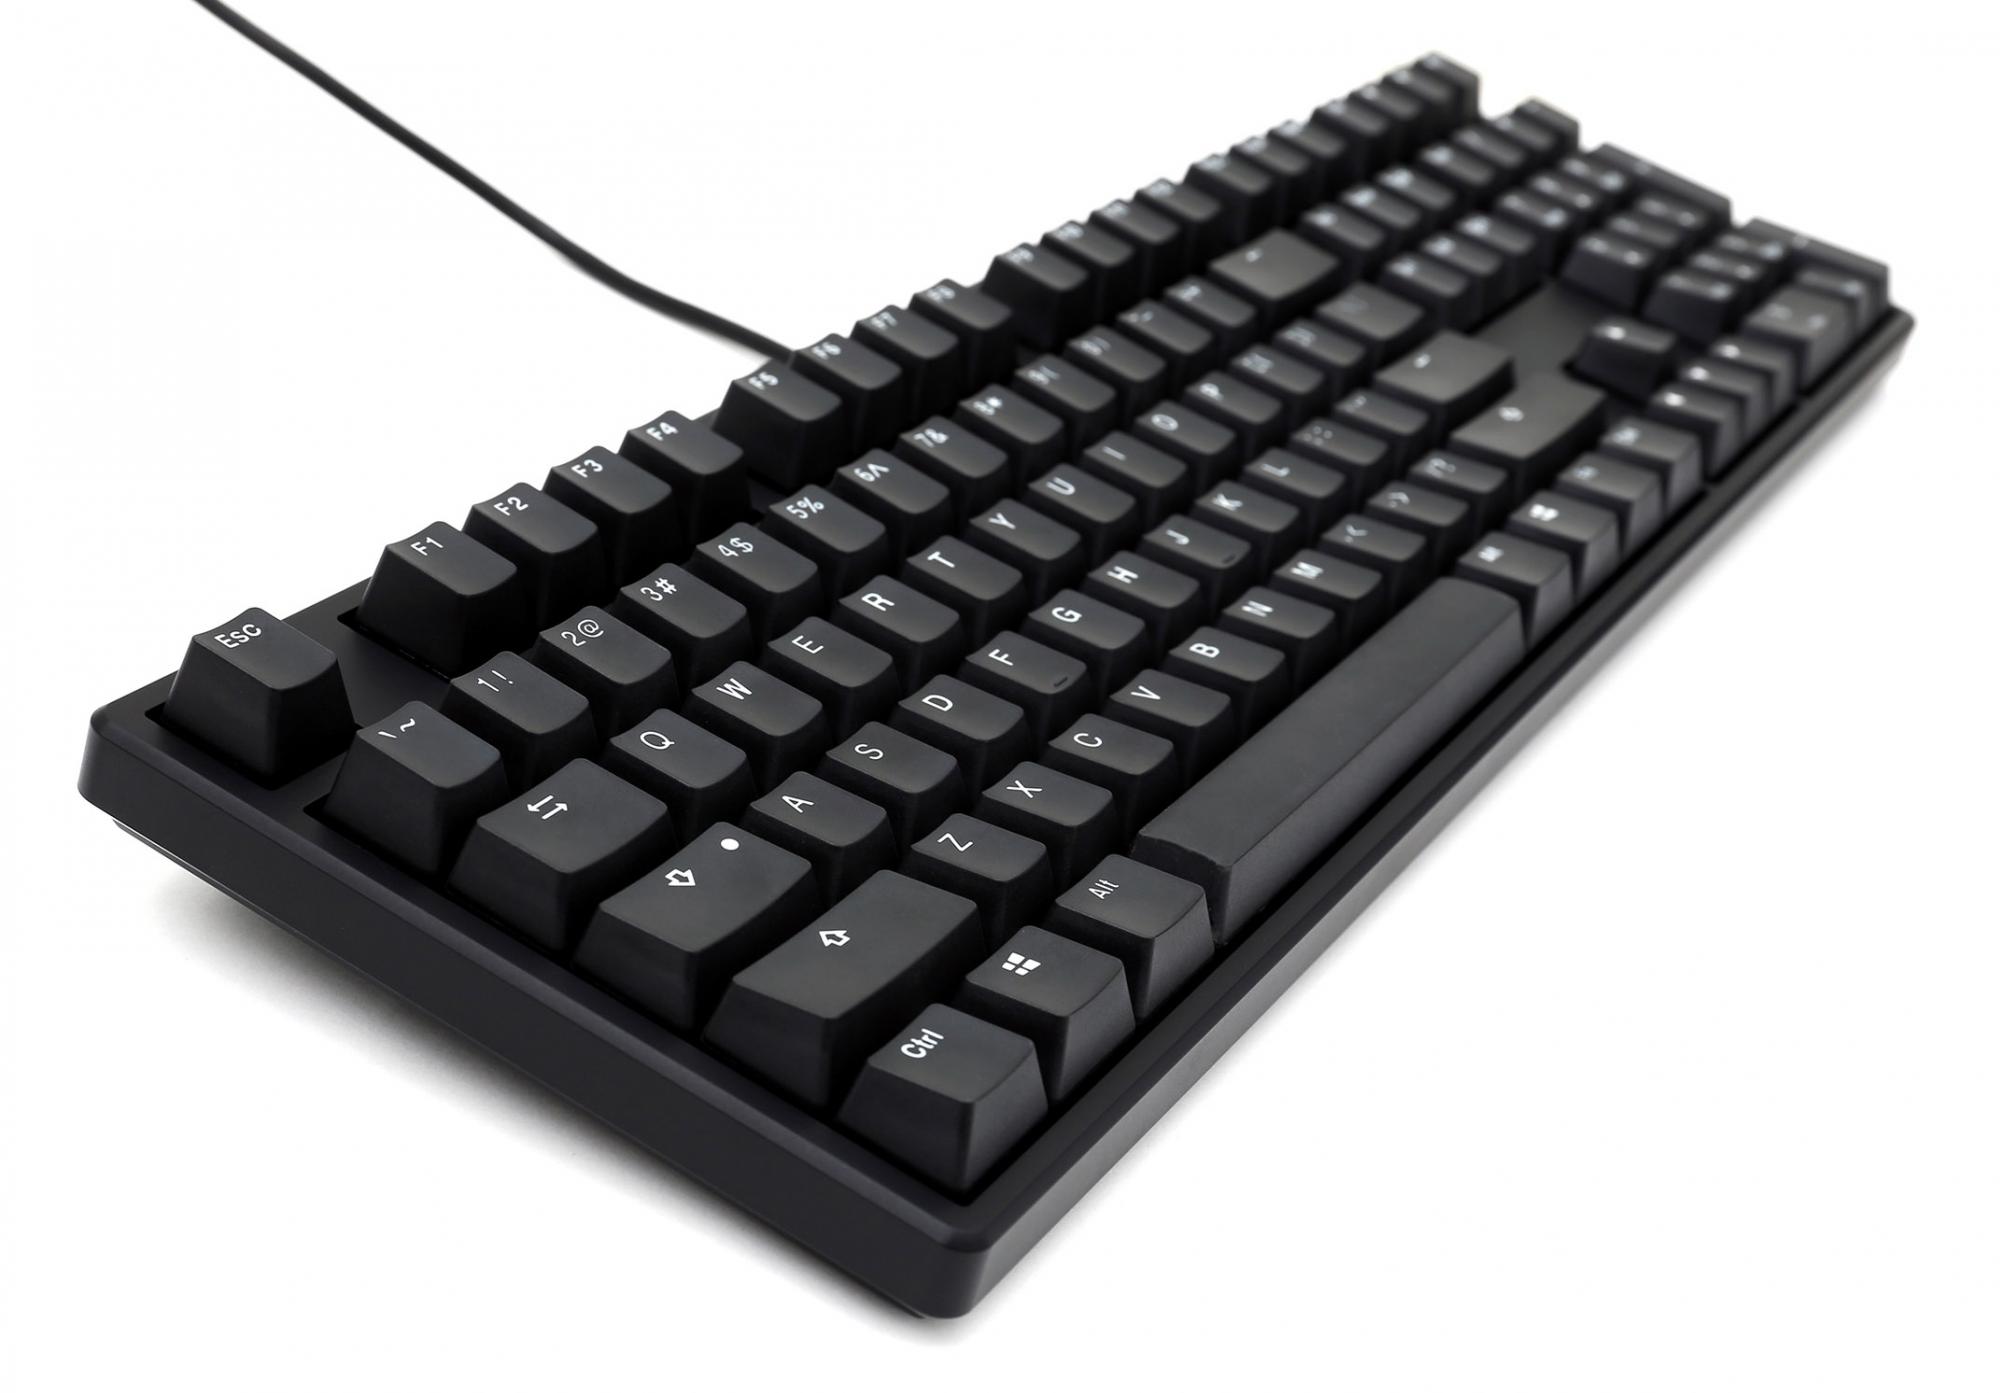 Dette er et MK Typist Double Shot PBT mekanisk tastatur.